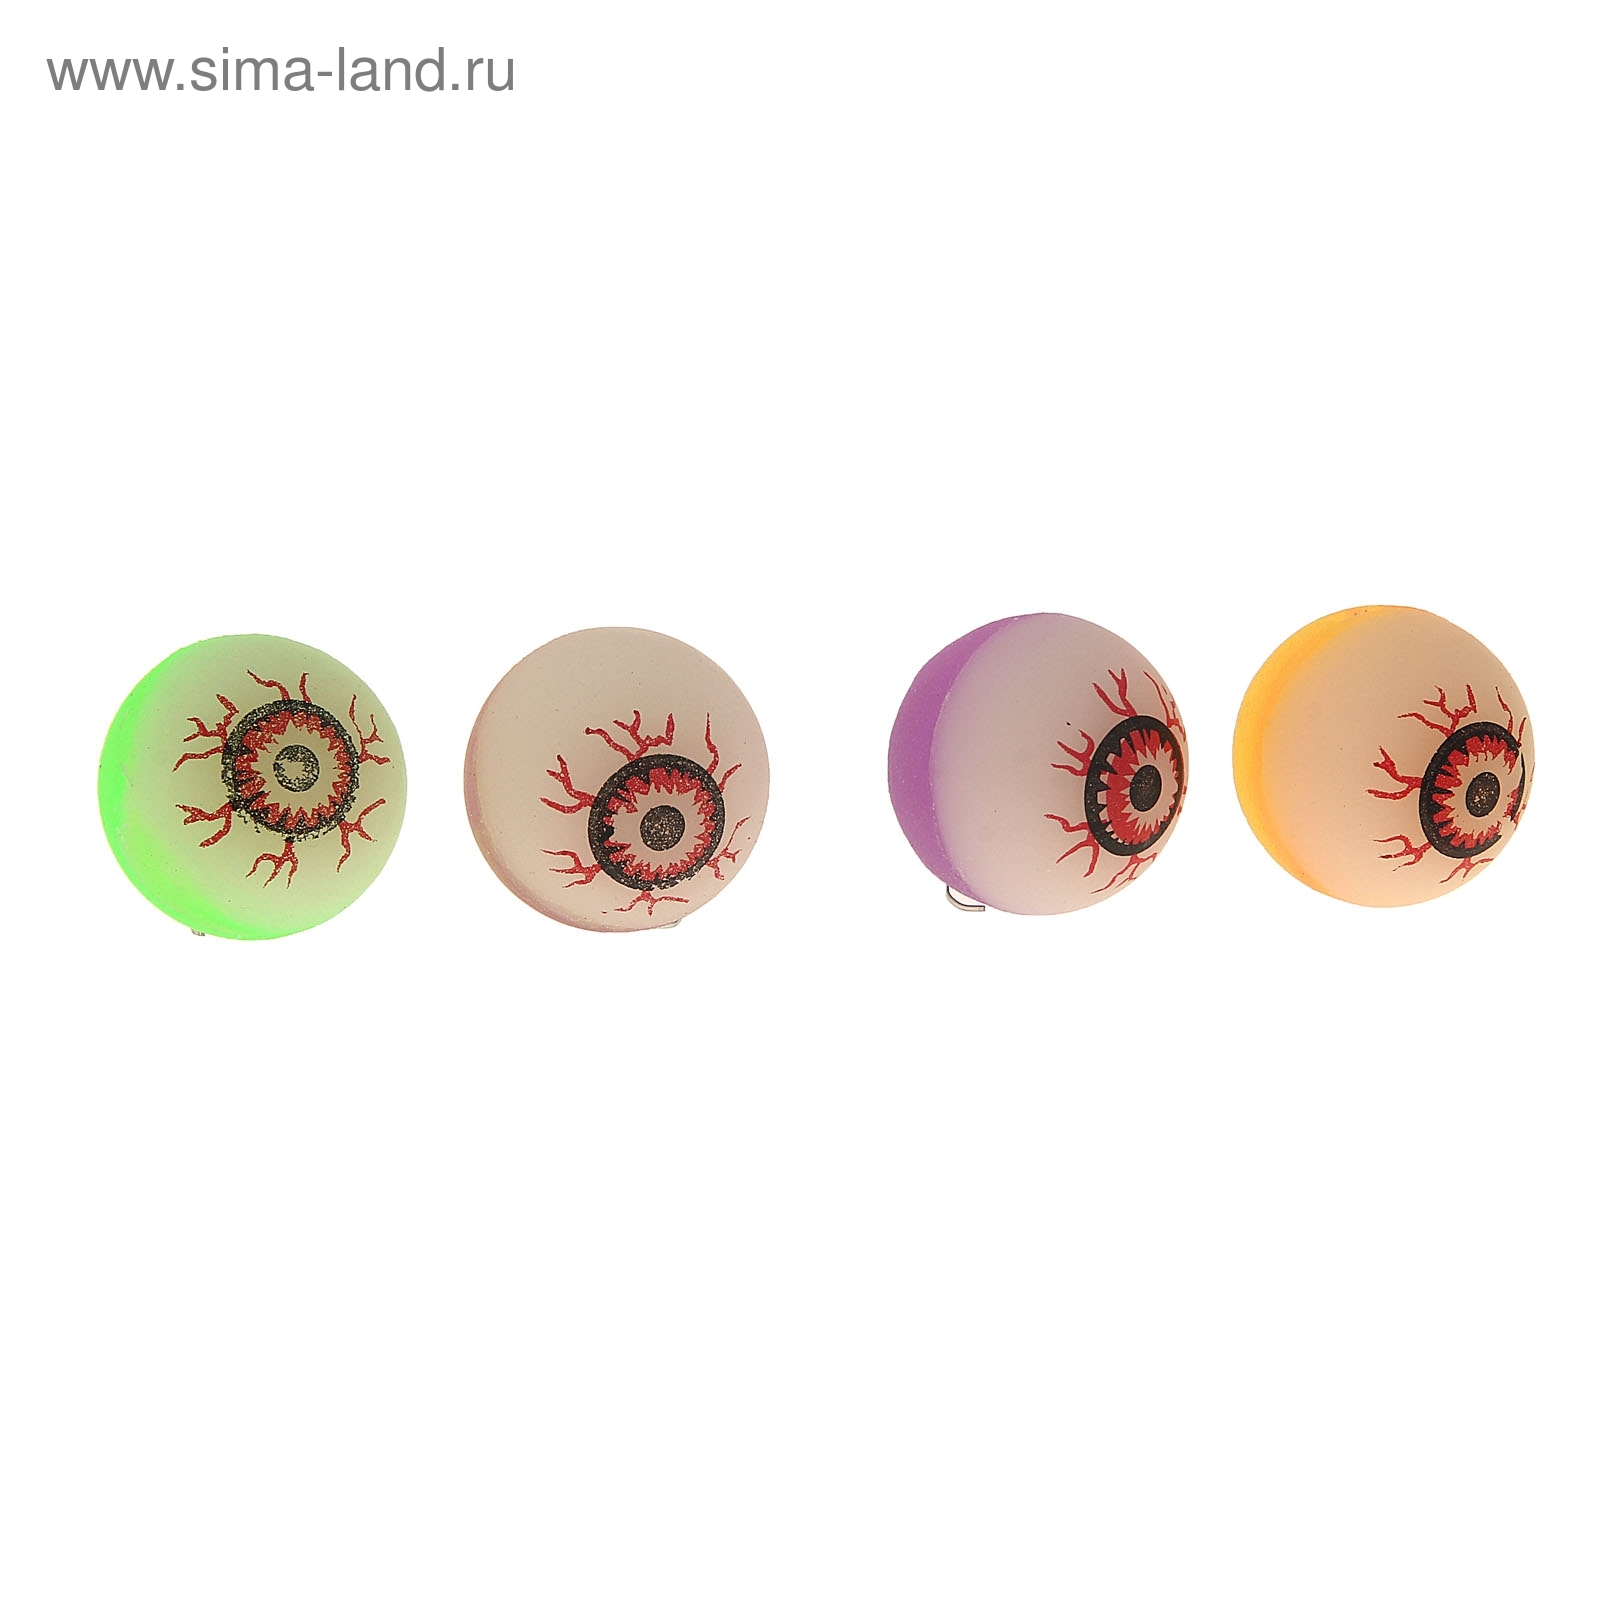 Мяч каучук "Глаз", цвета МИКС 3,2 см